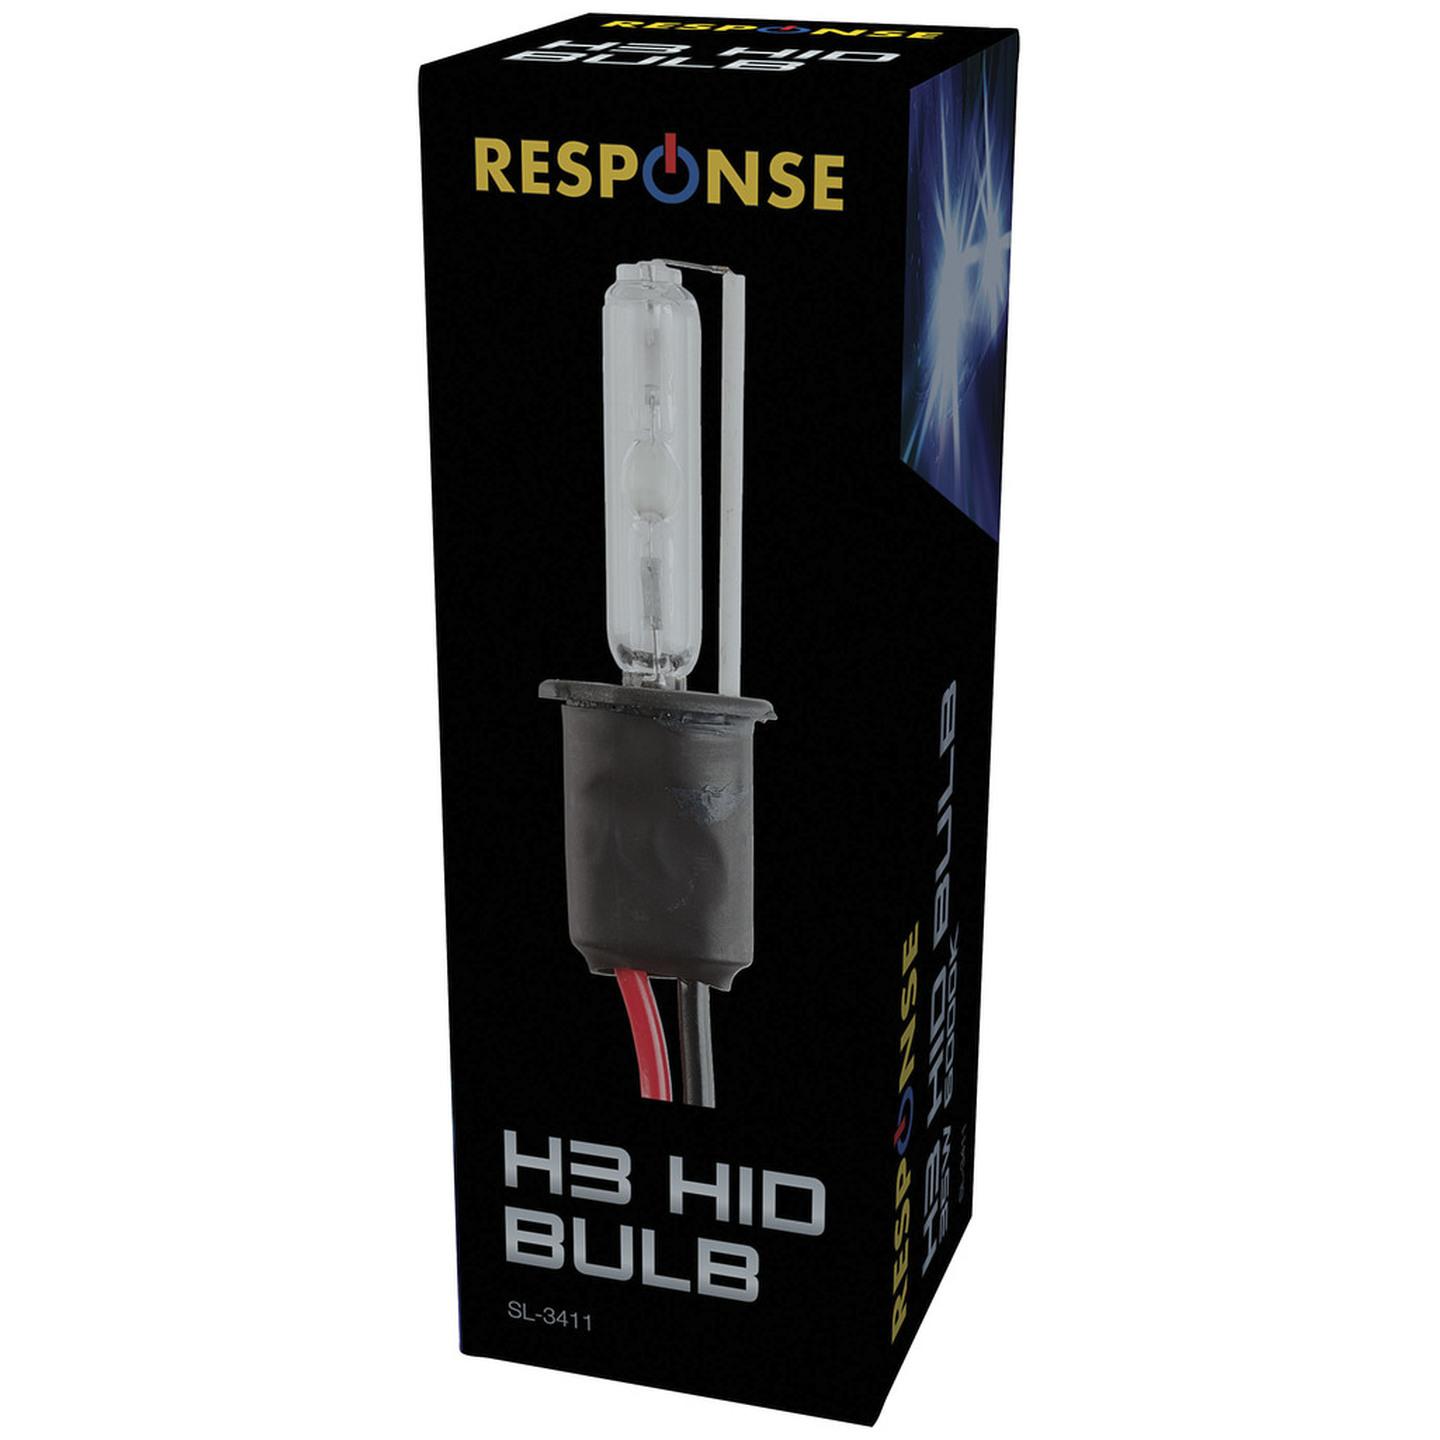 12V H3 HID Bulb Single Beam